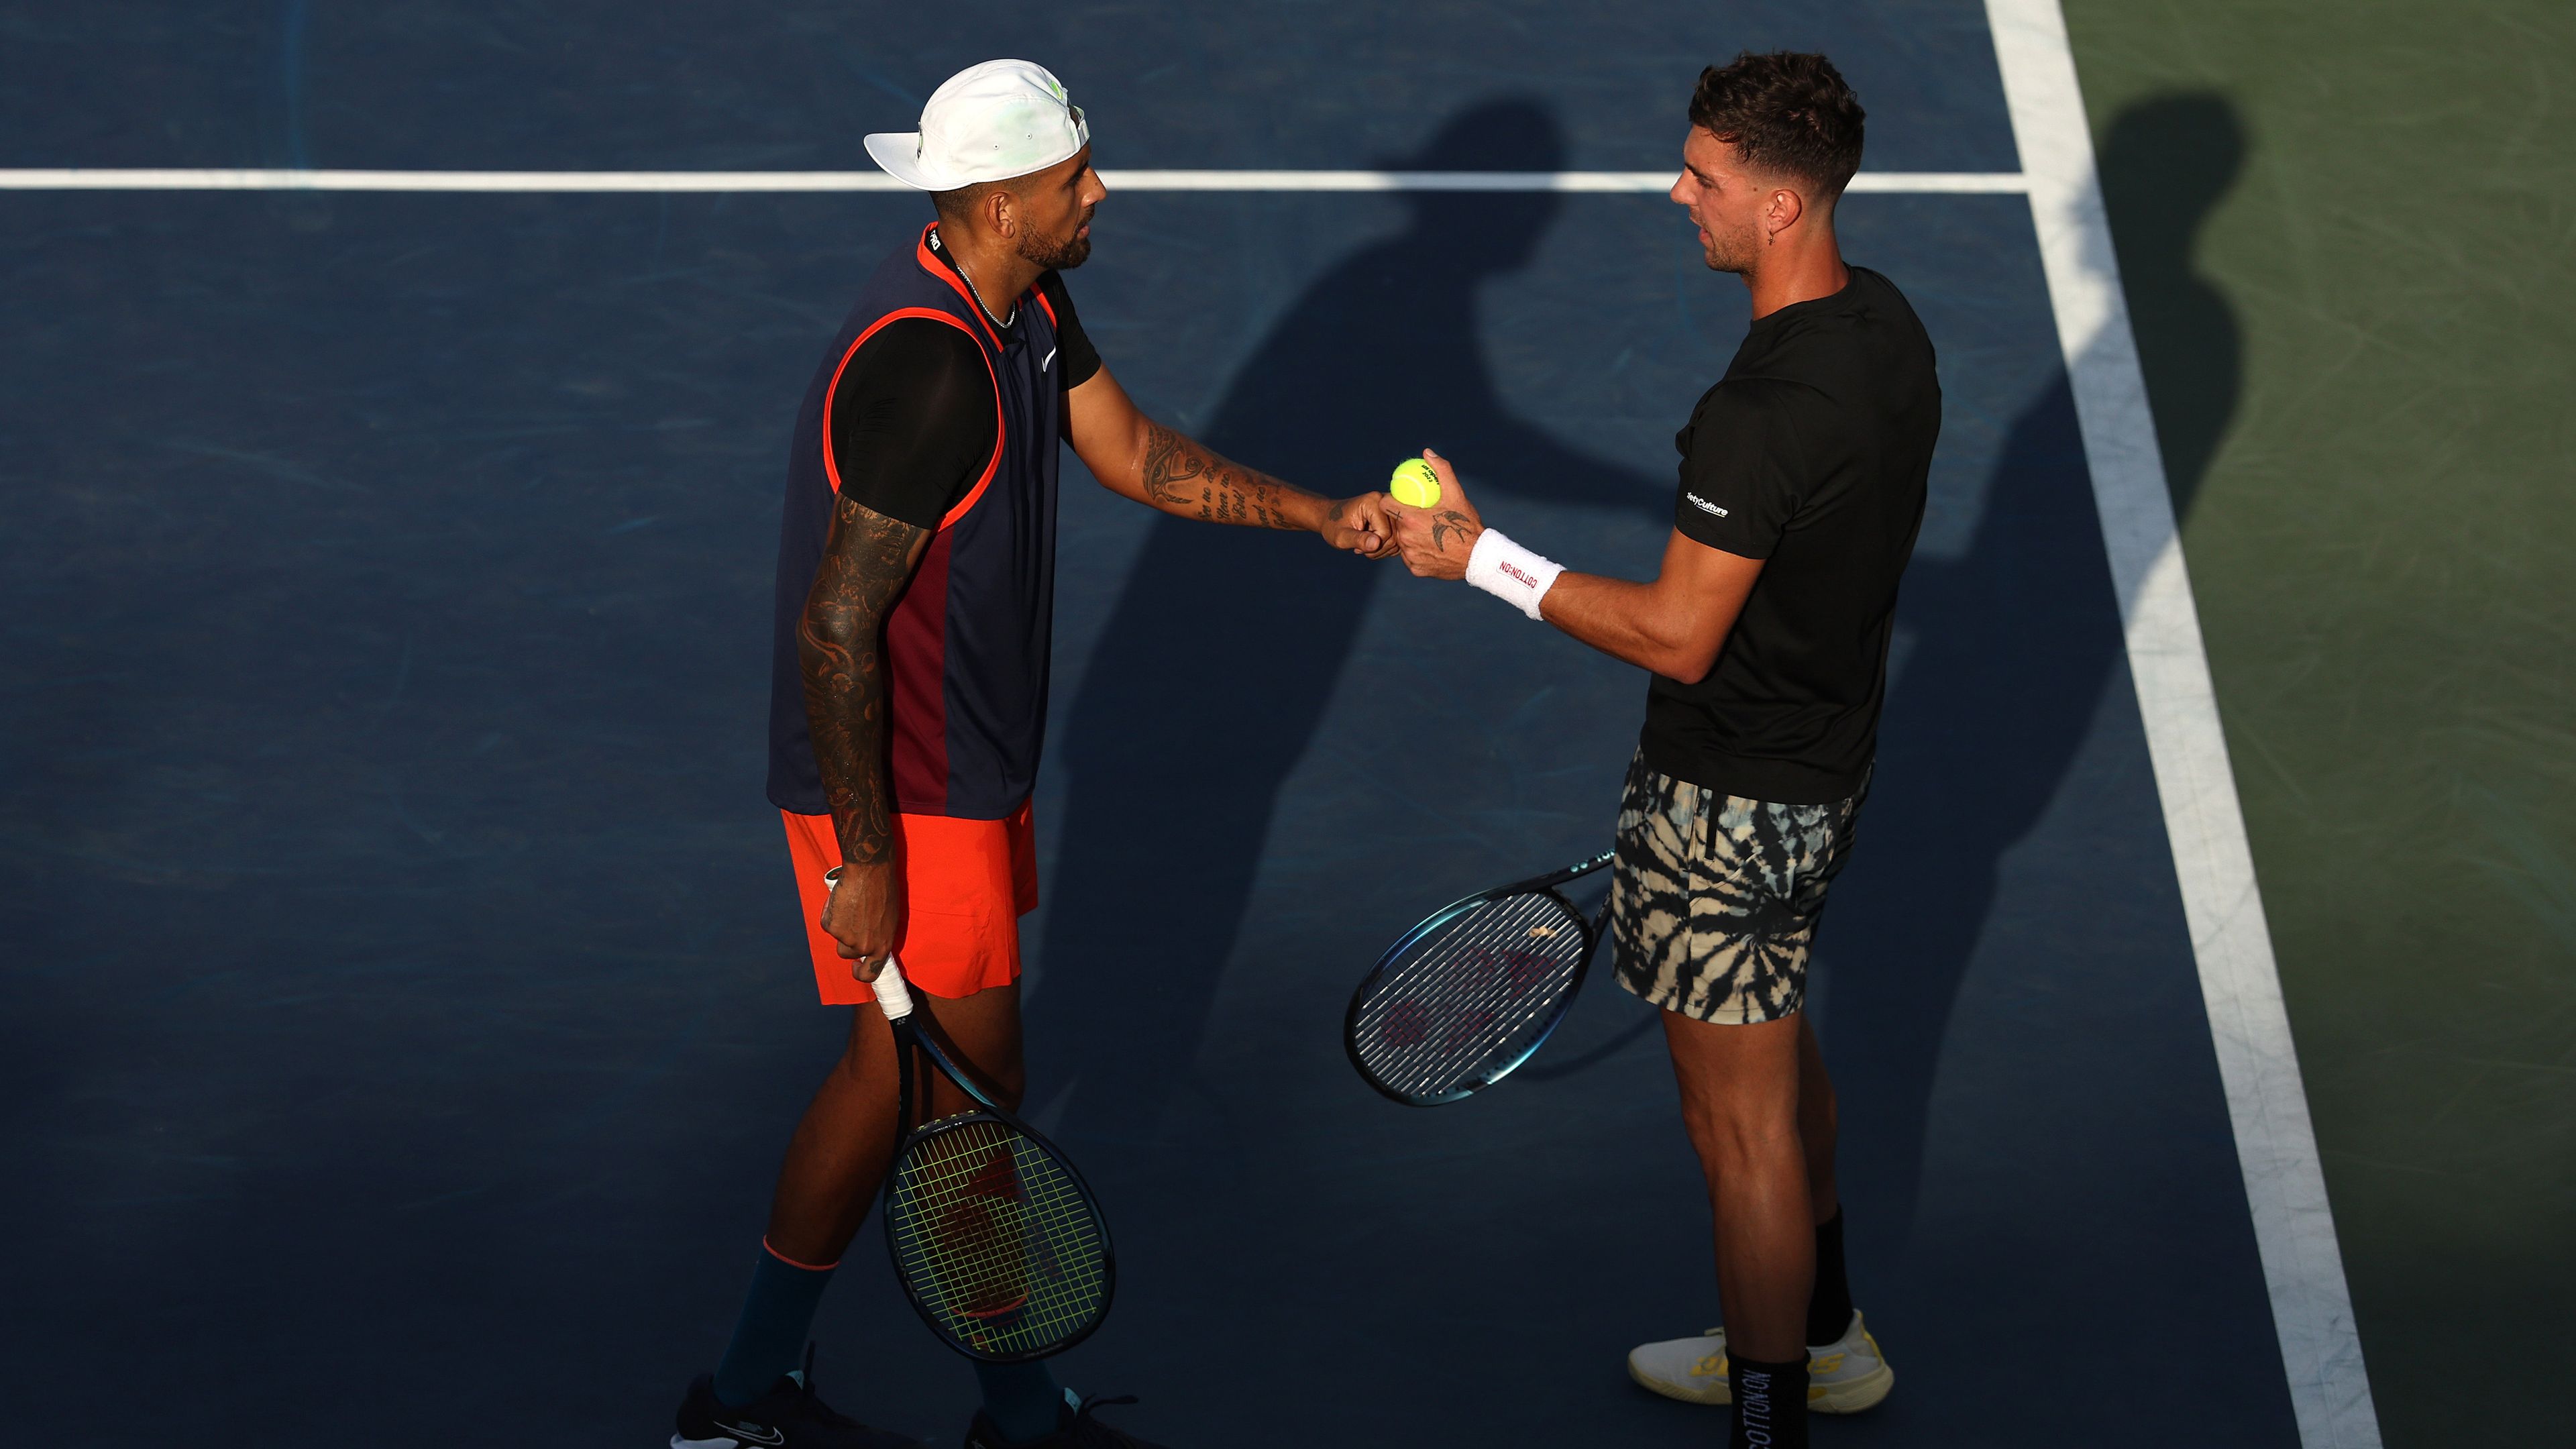 'Special Ks' Nick Kyrgios and Thanasi Kokkinakis through to the third round of US Open doubles